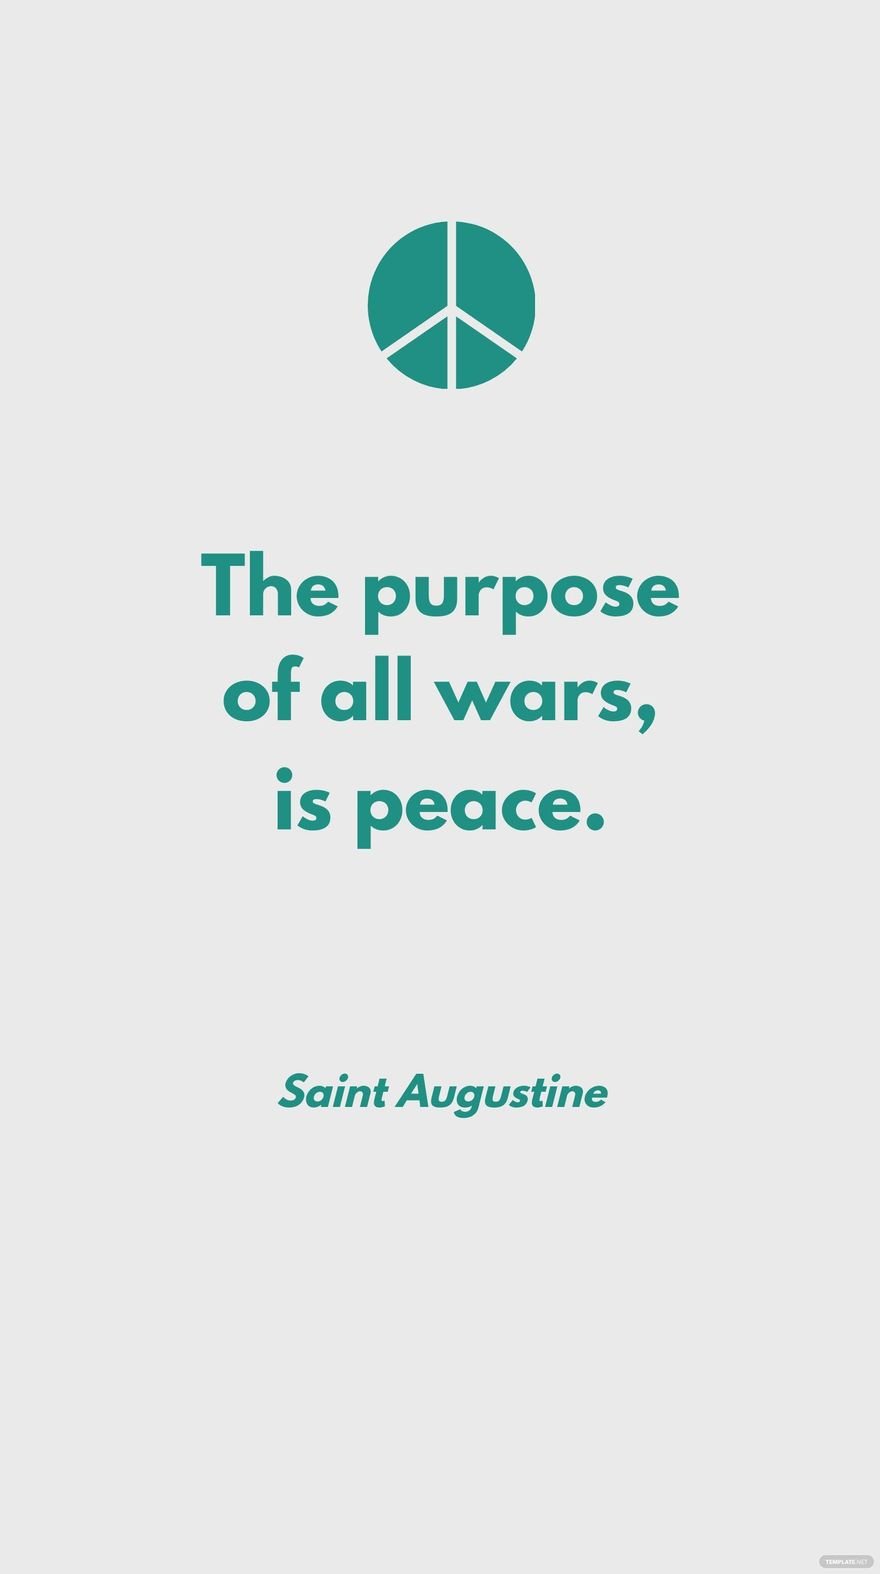 Saint Augustine - The purpose of all wars, is peace. in JPG